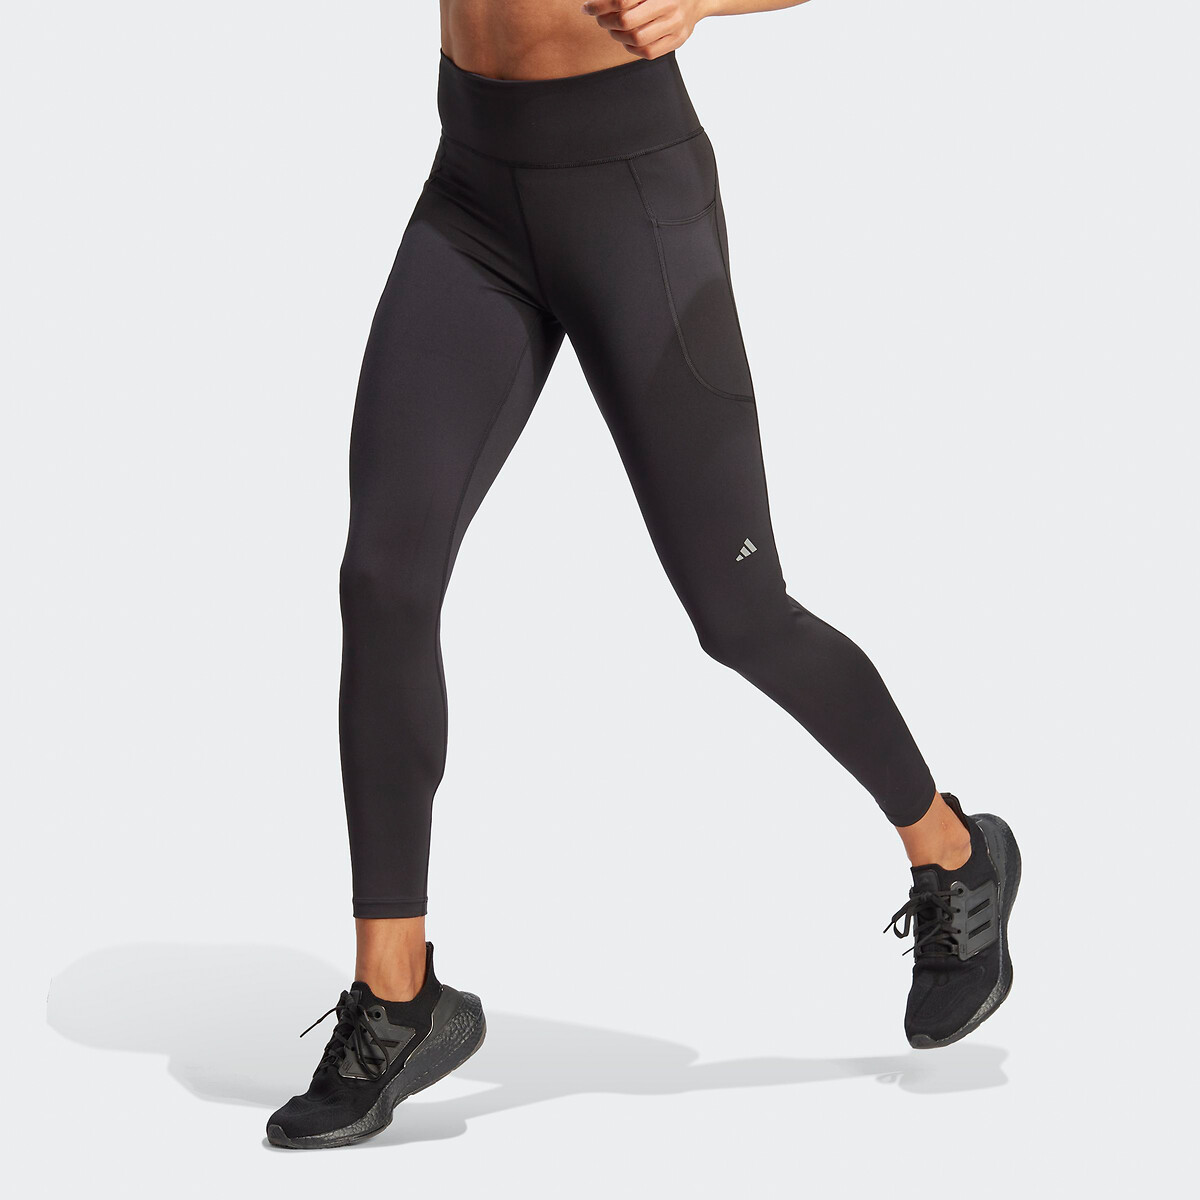 L. HW RUNNING TIGHTS Sports leggings - Women - Diadora Online Store US